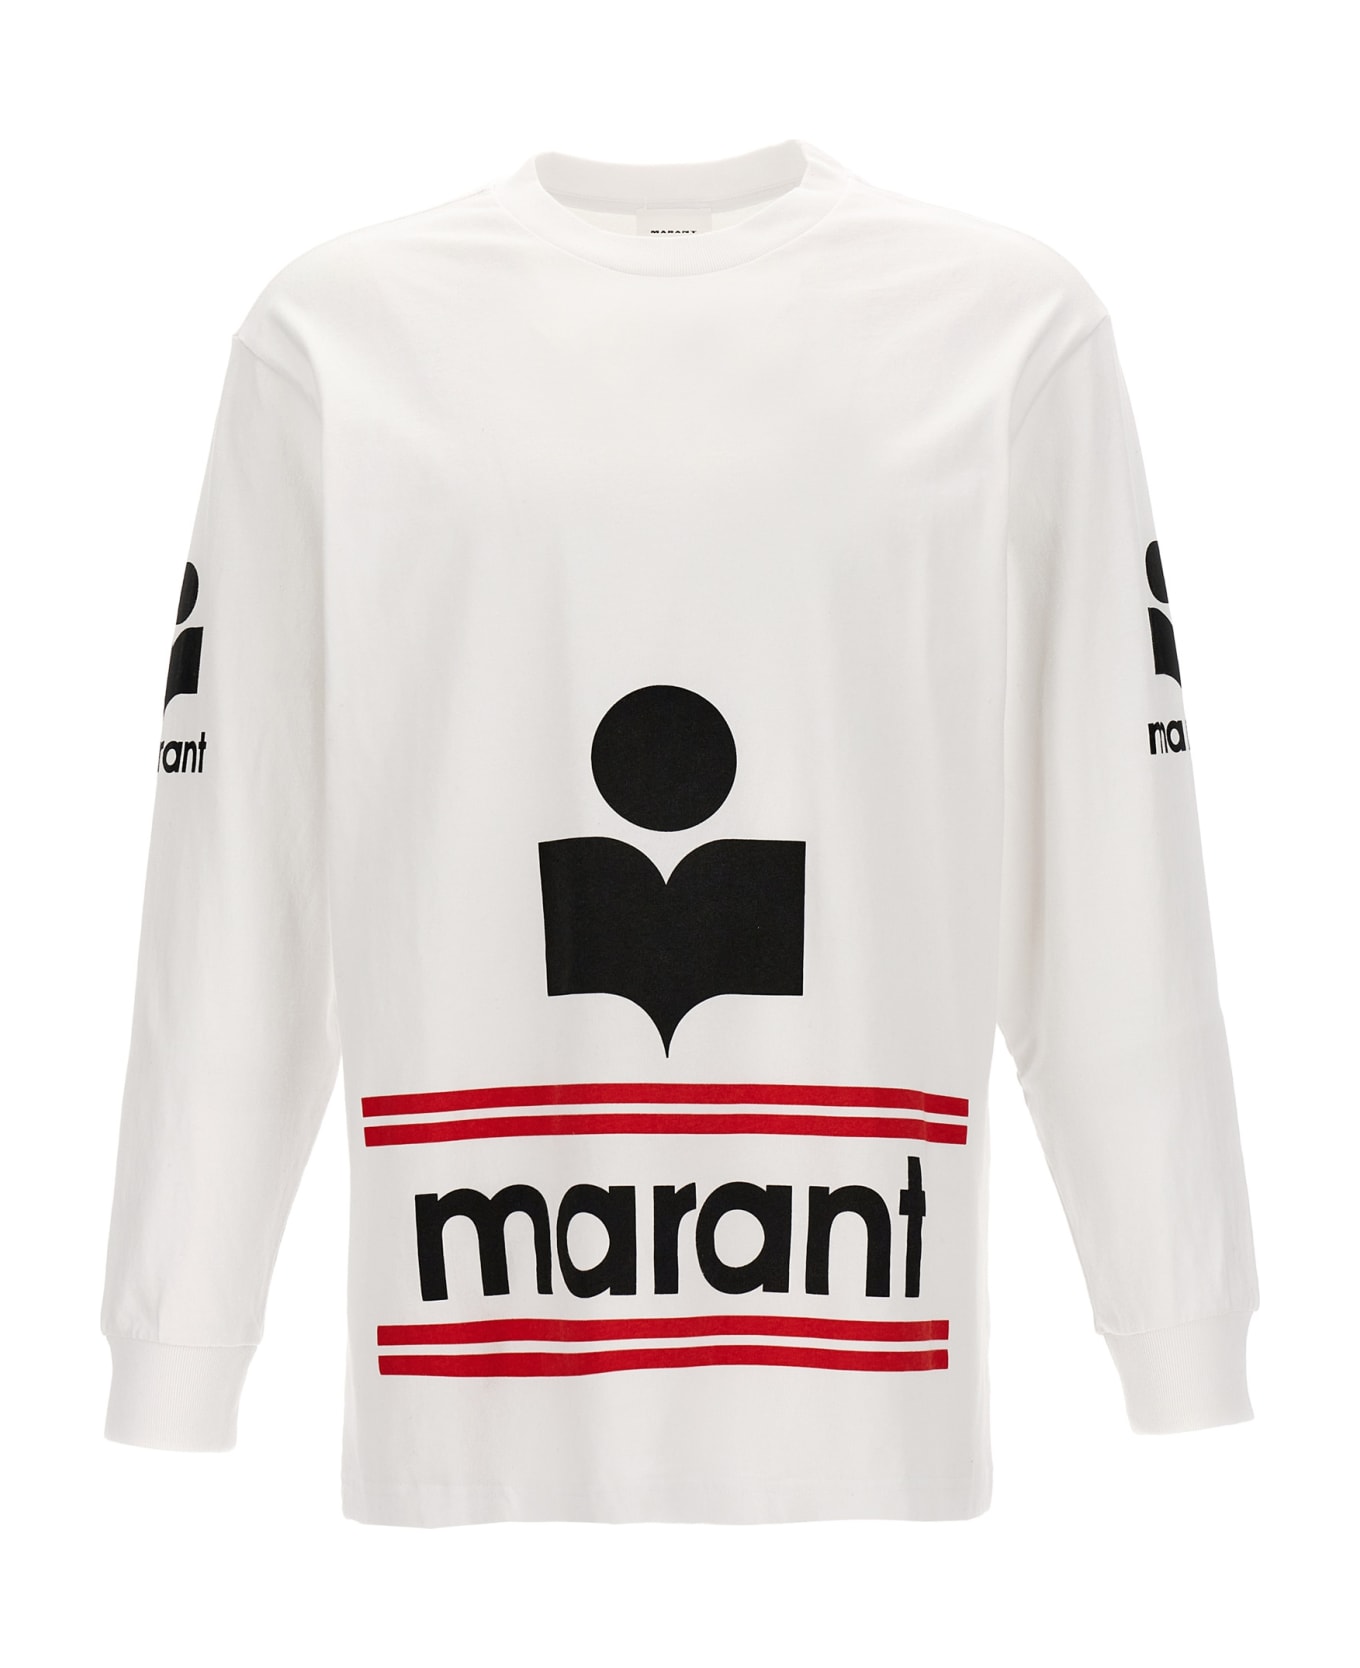 Isabel Marant Gianni Cotton Tee-shirt - White